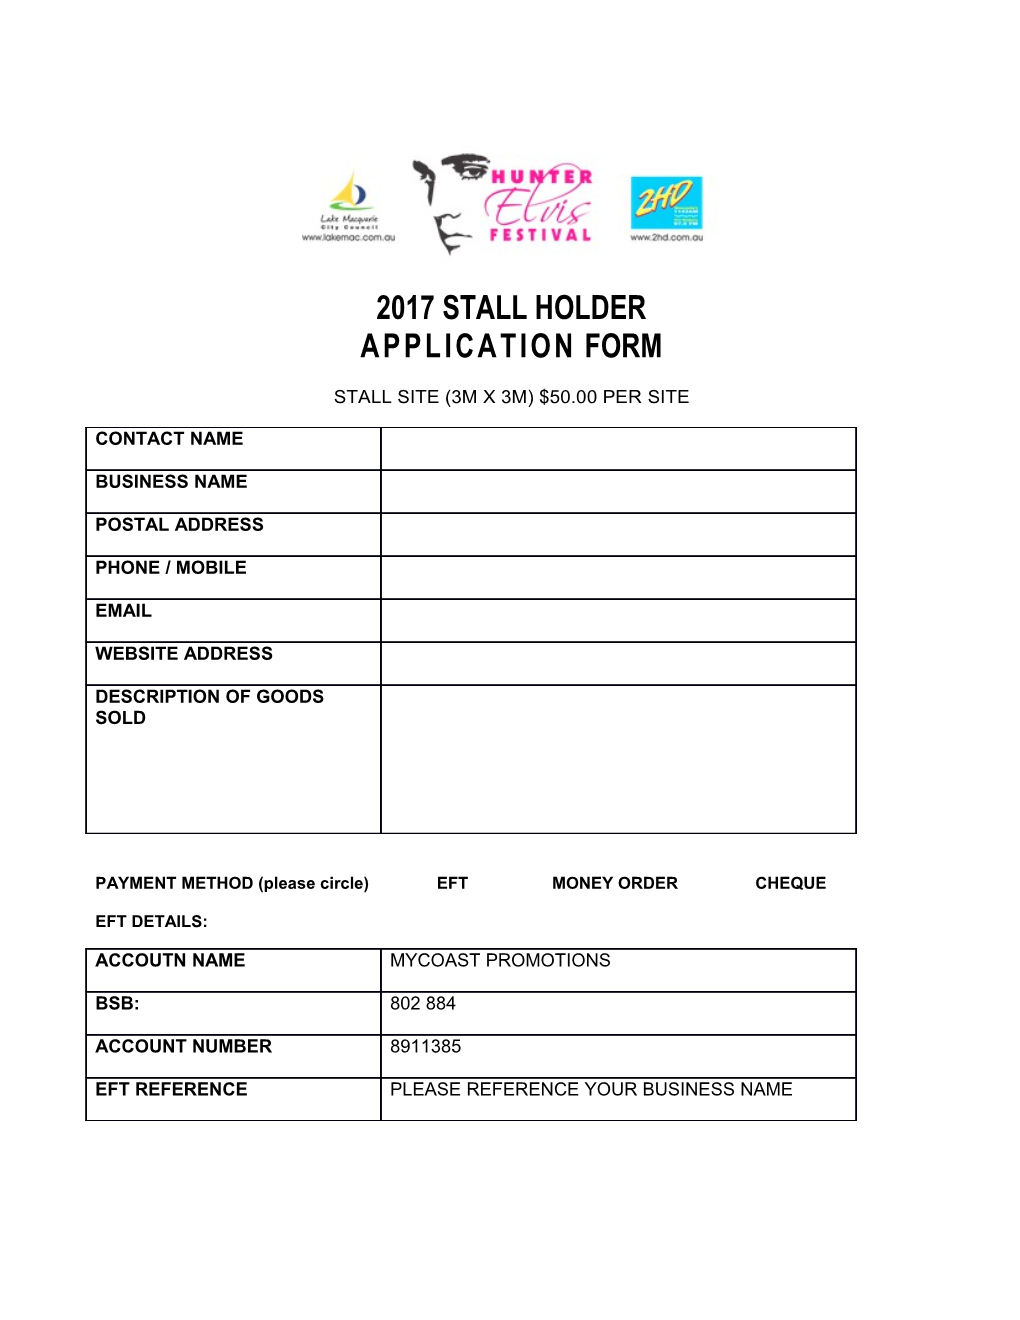 2017 Stall Holder Application Form